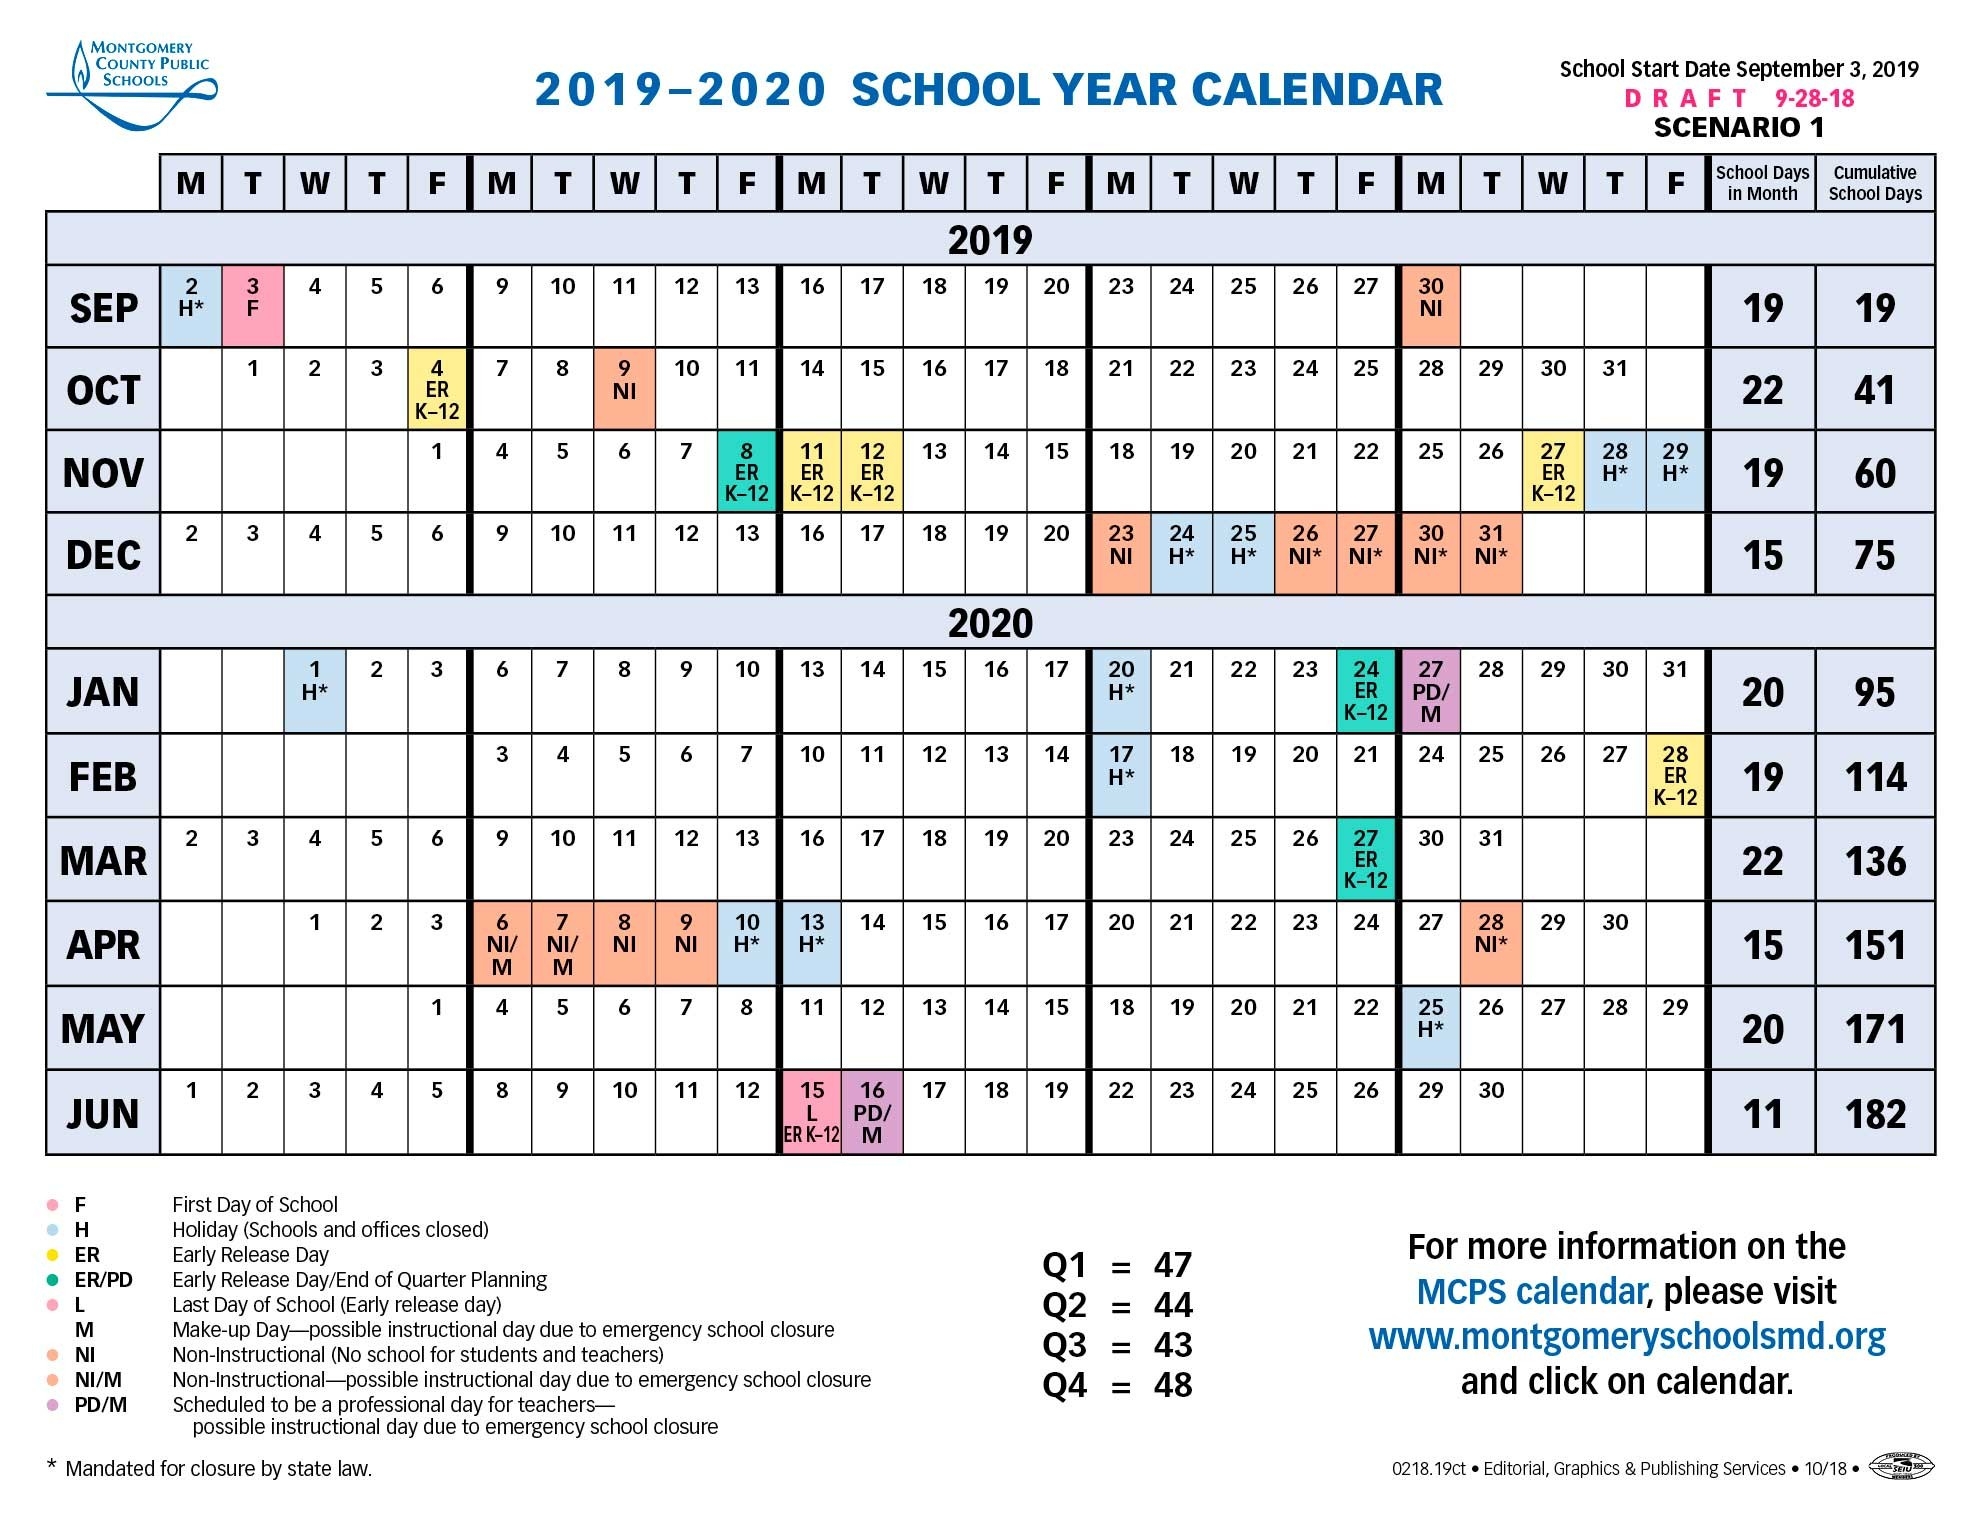 School Board Approves Longer Spring Break For 2019-2020-Calendar Of Jewish Holidays 2020